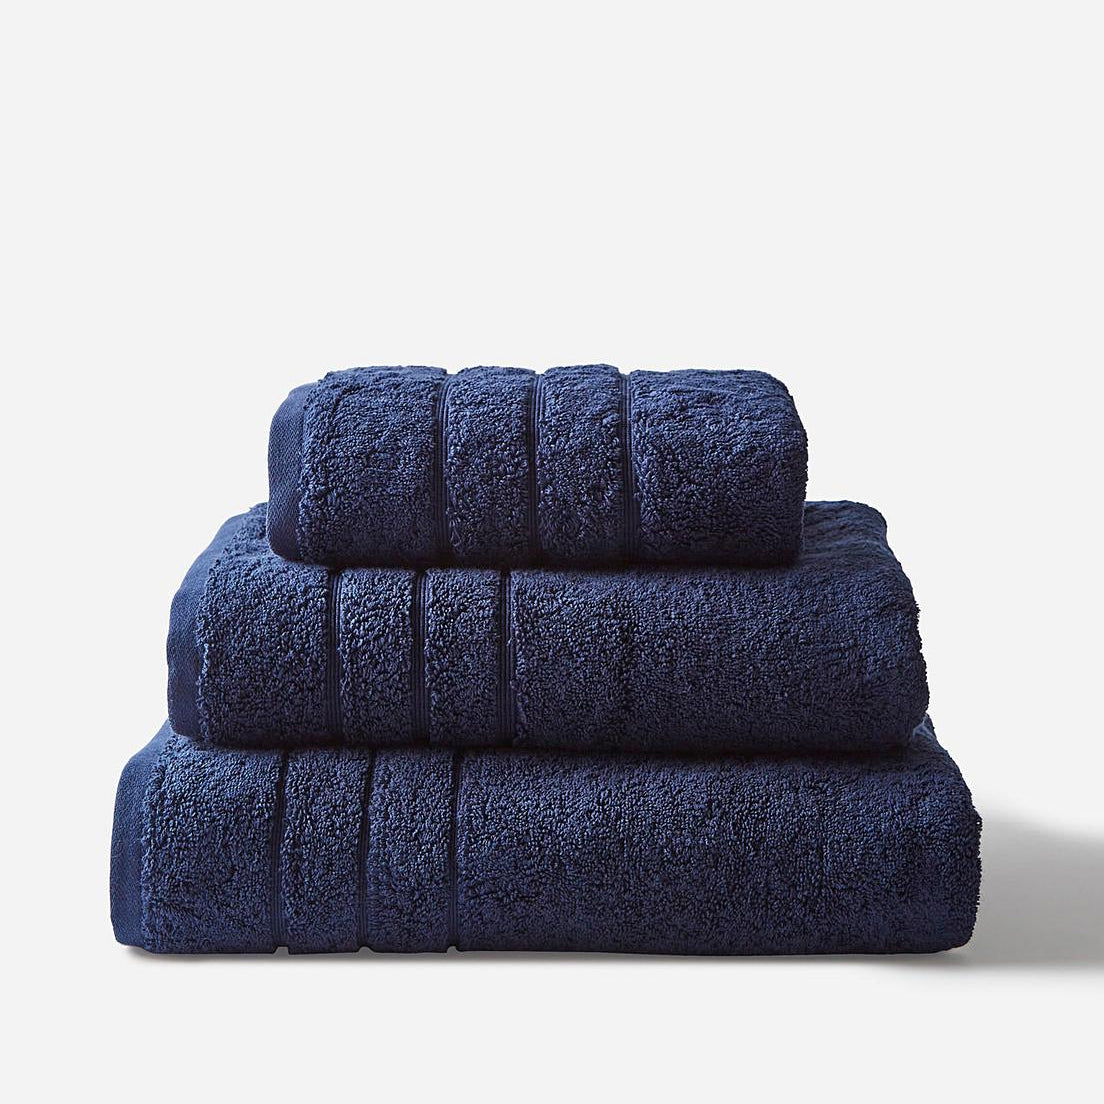 Hotel Quality Towels - Navy Bathroom Towels